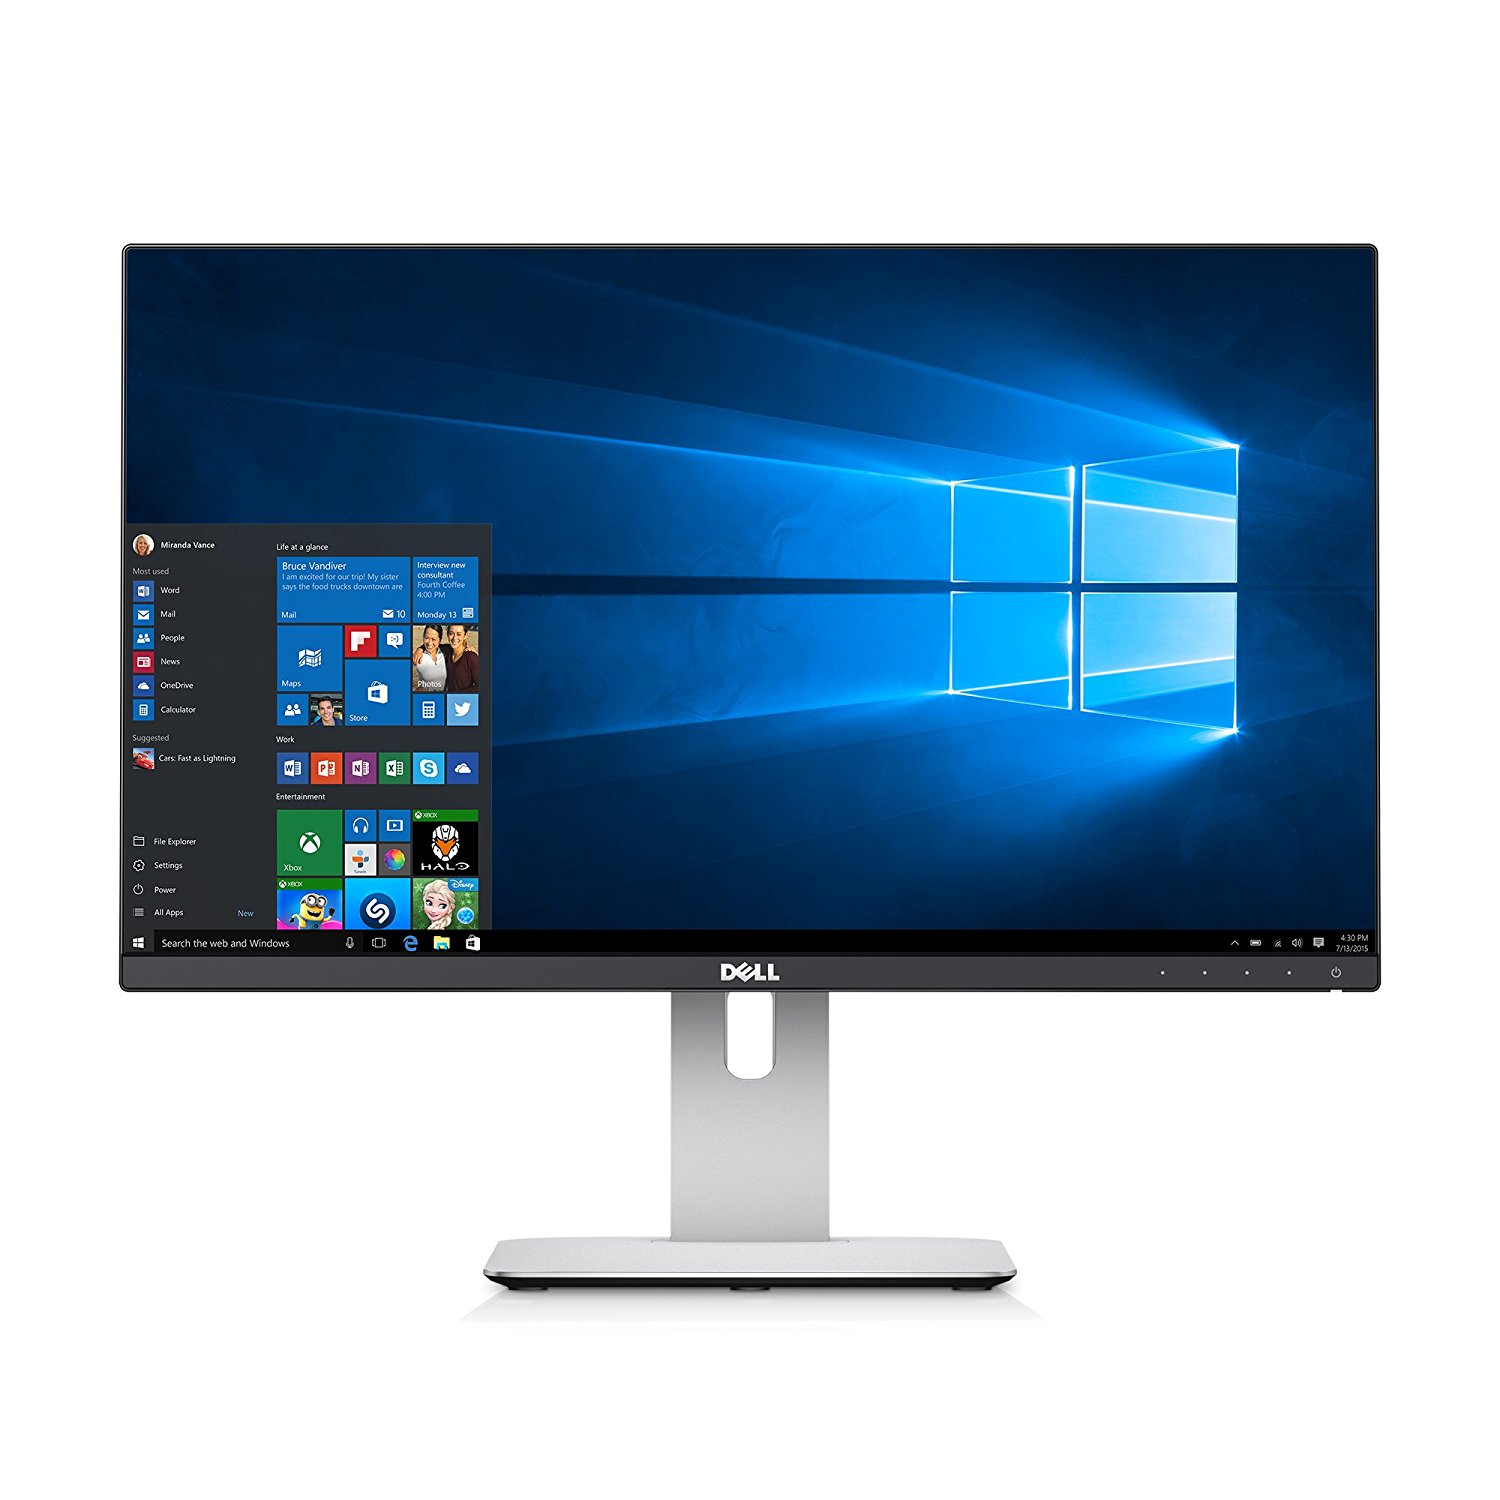 Amazon.com: Dell UltraSharp U2414H 23.8” Inch Screen LED Monitor ...